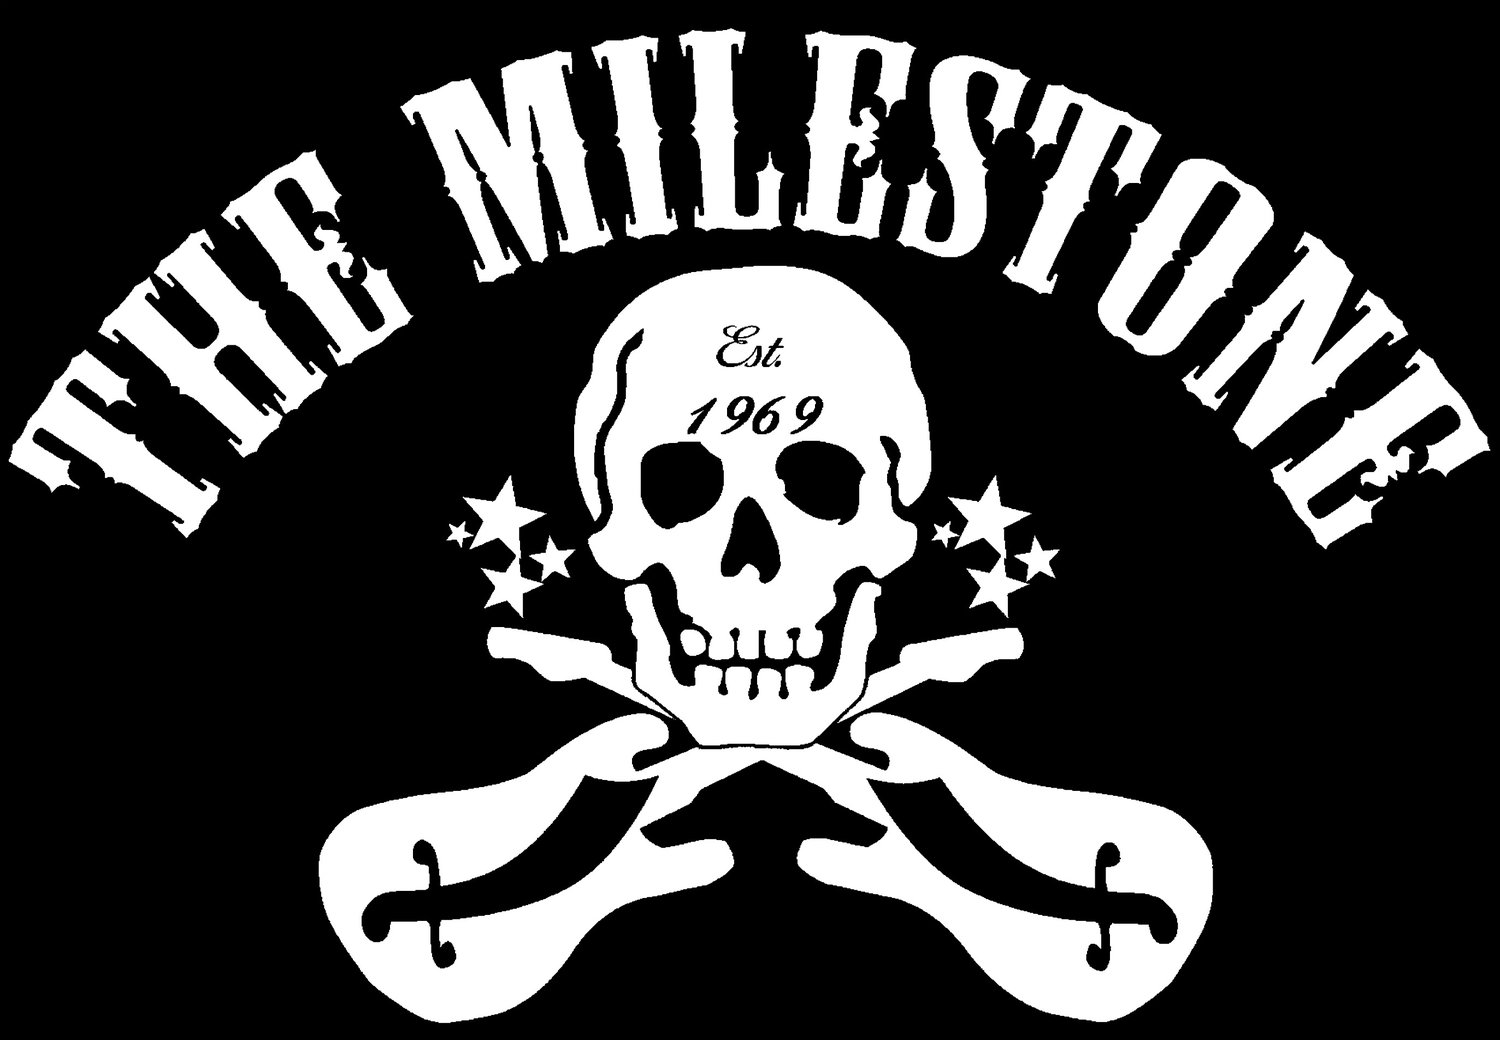 The Milestone Club